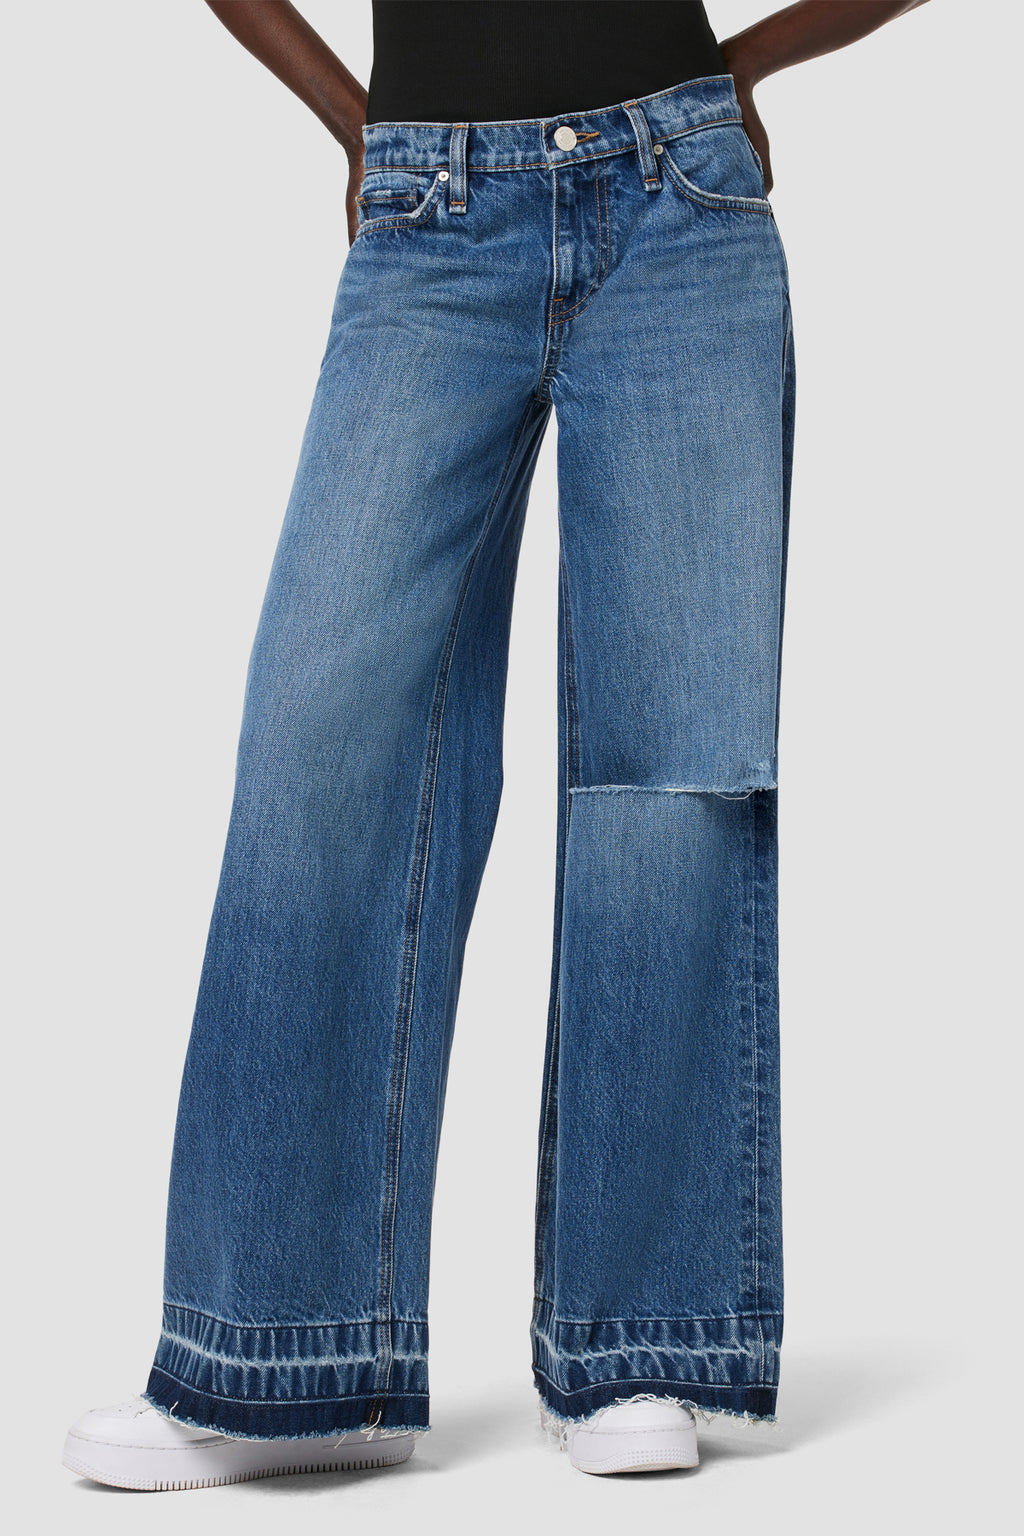 Shop Women's Denim Wide Leg at Hudson Jeans